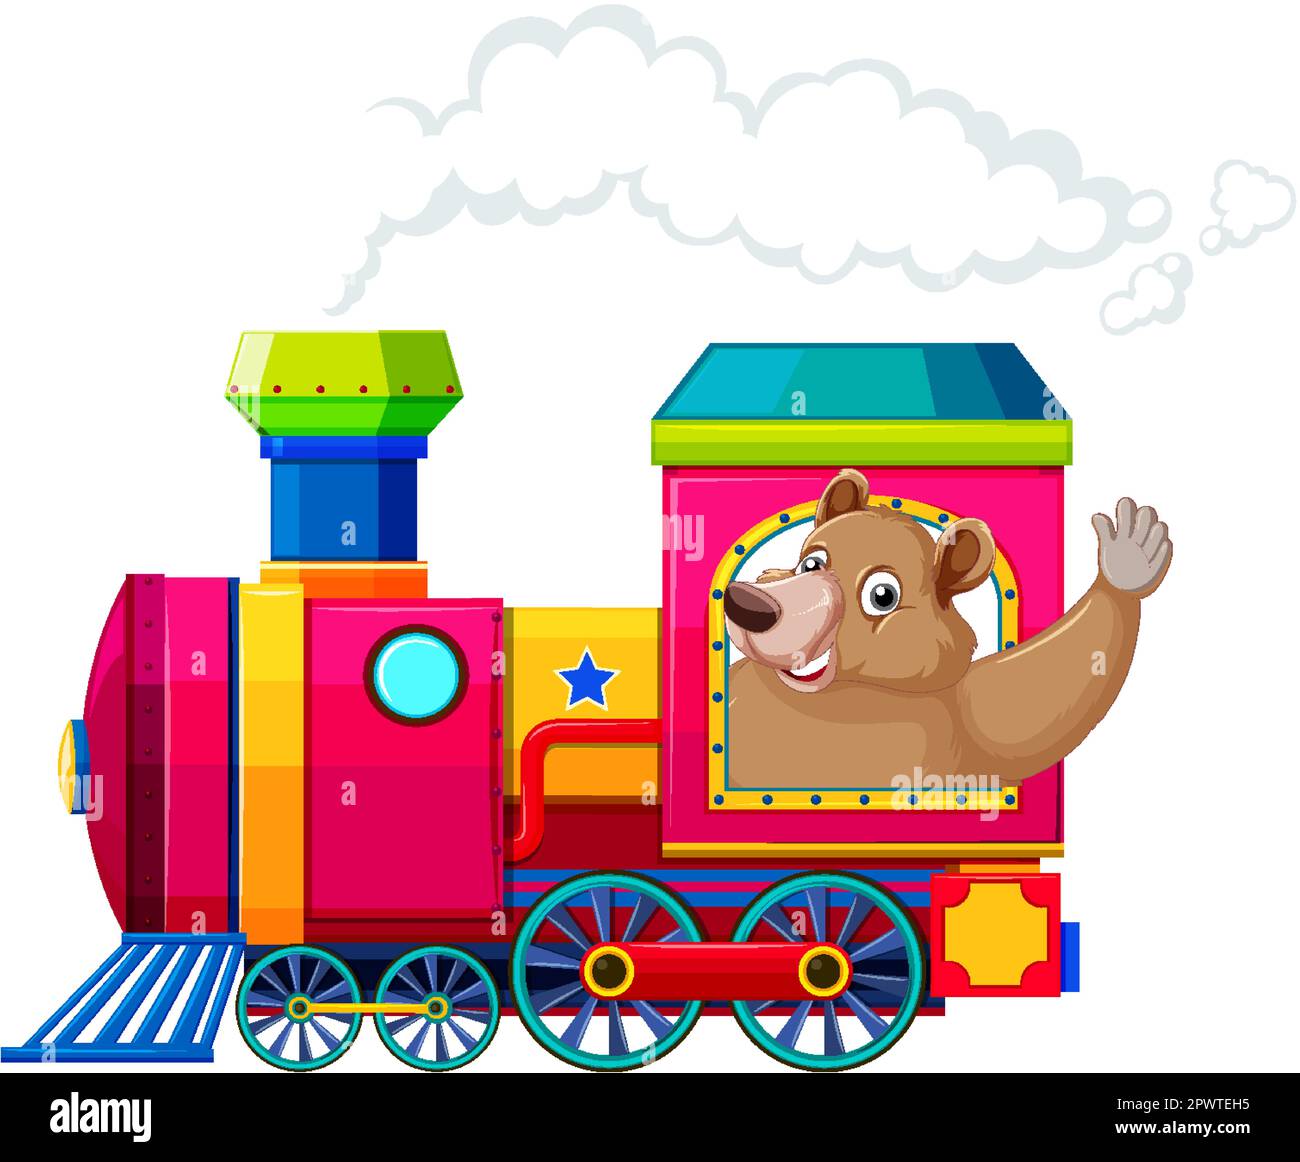 A bear on train in cartoon style illustration Stock Vector